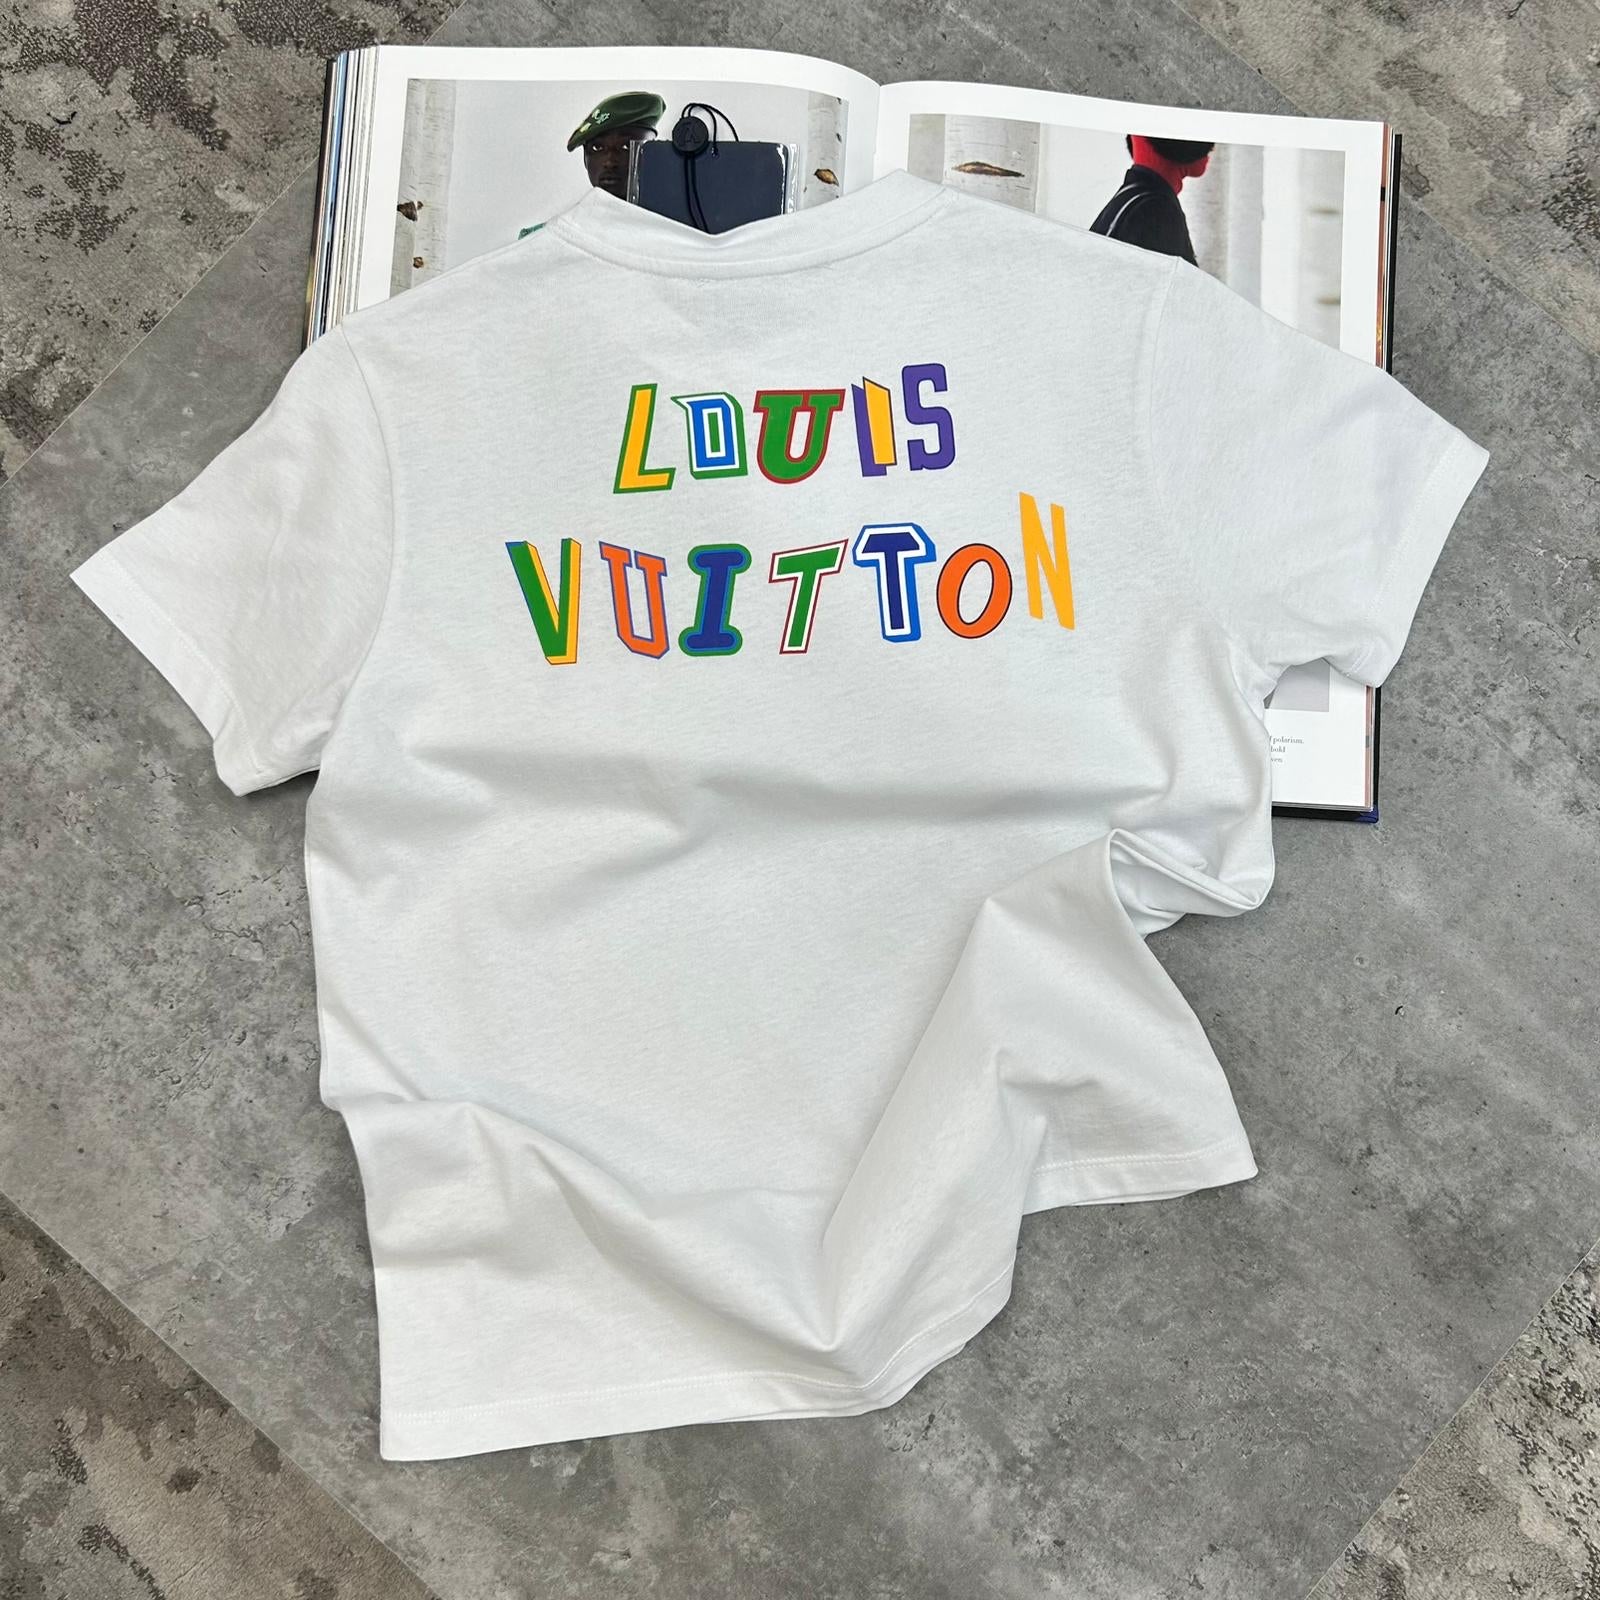 LOUIS VUITTON T-SHIRTS FOR KIDS 